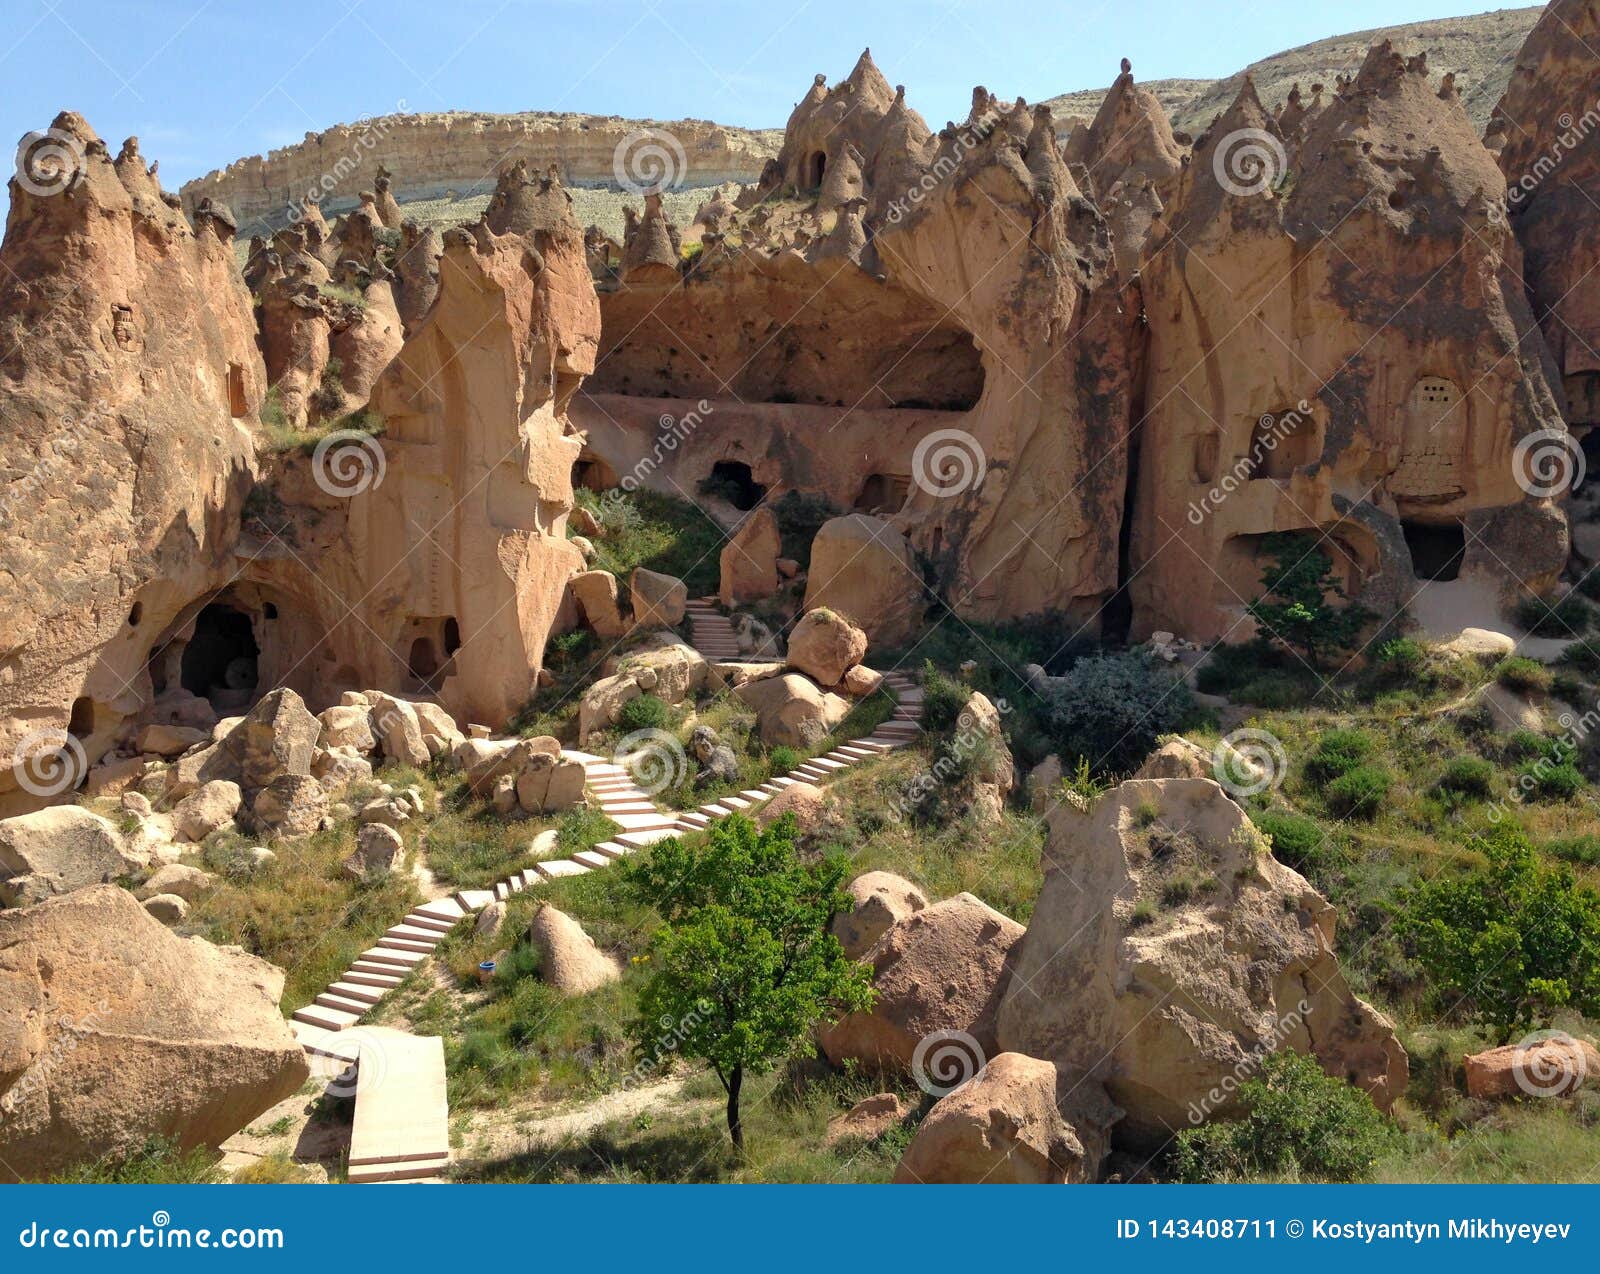 stone valleys of cappadocia